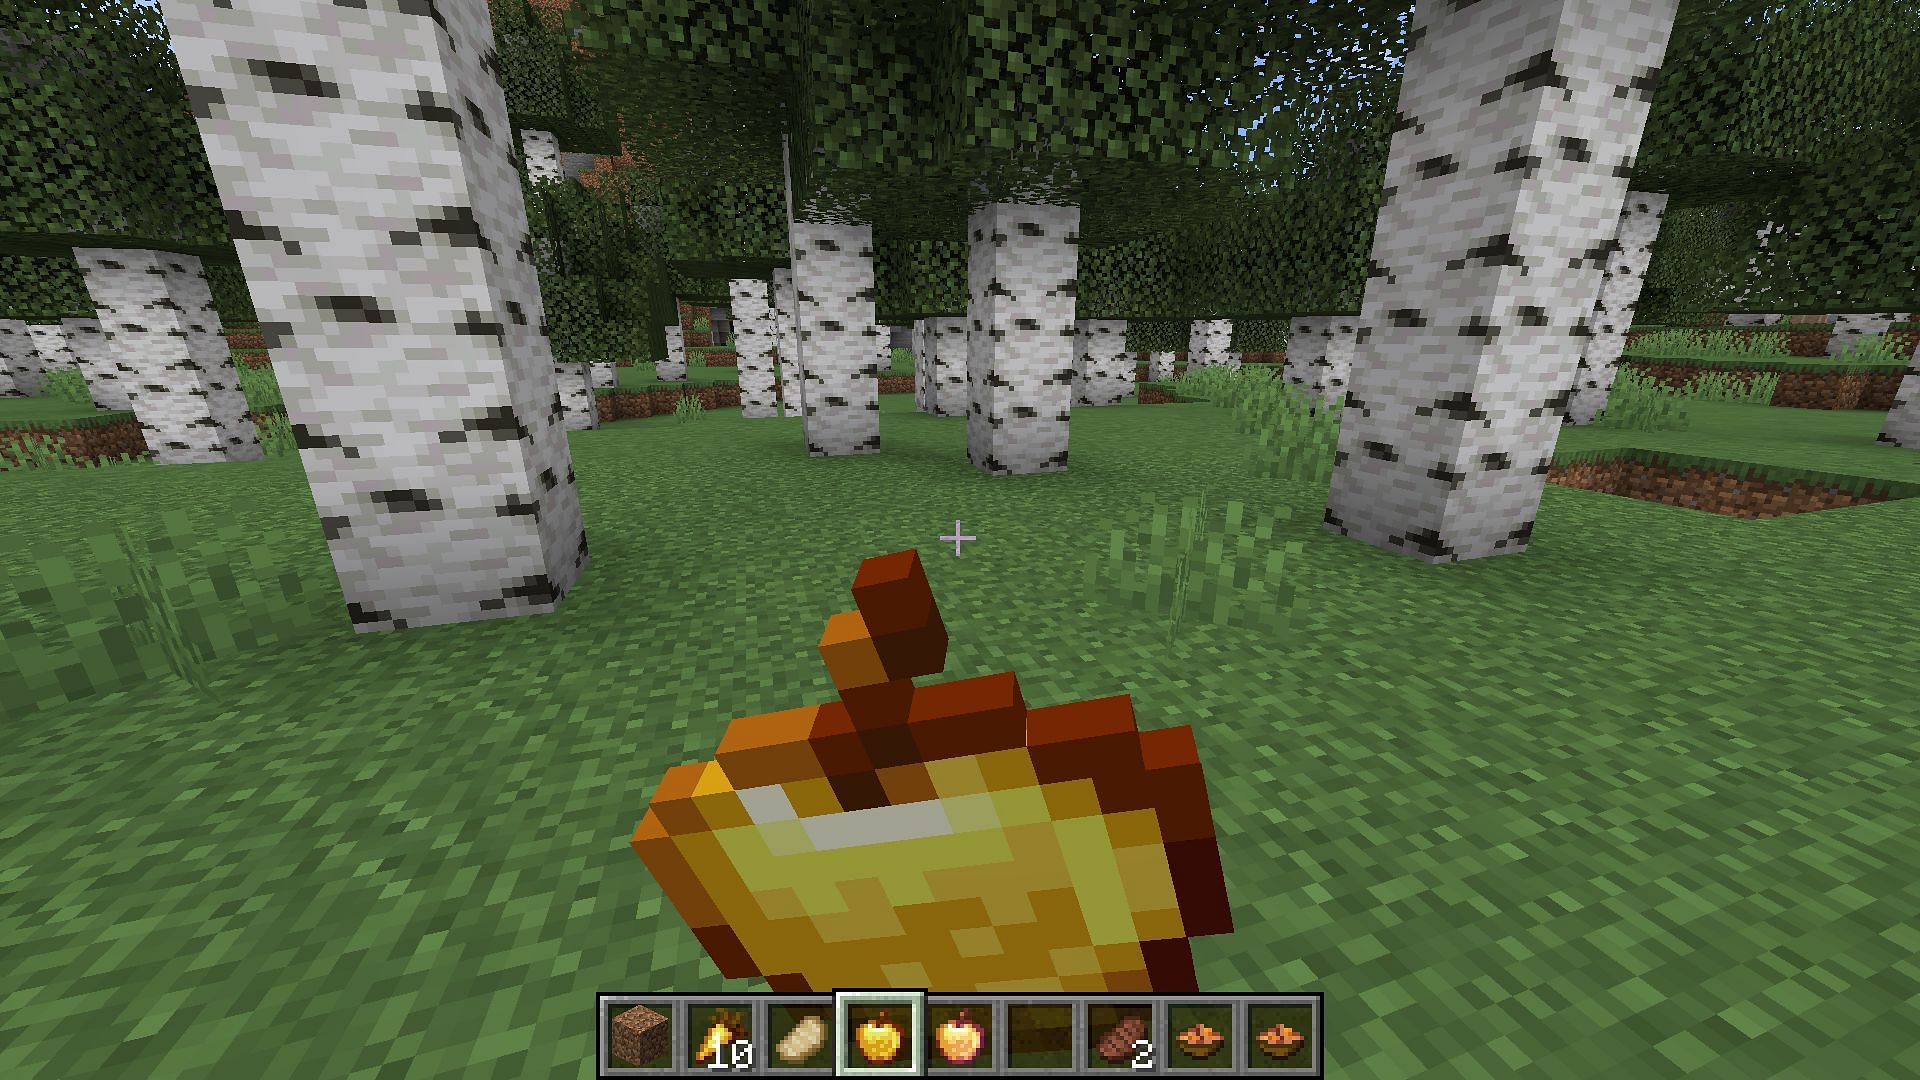 Golden Apple (Image via Minecraft)